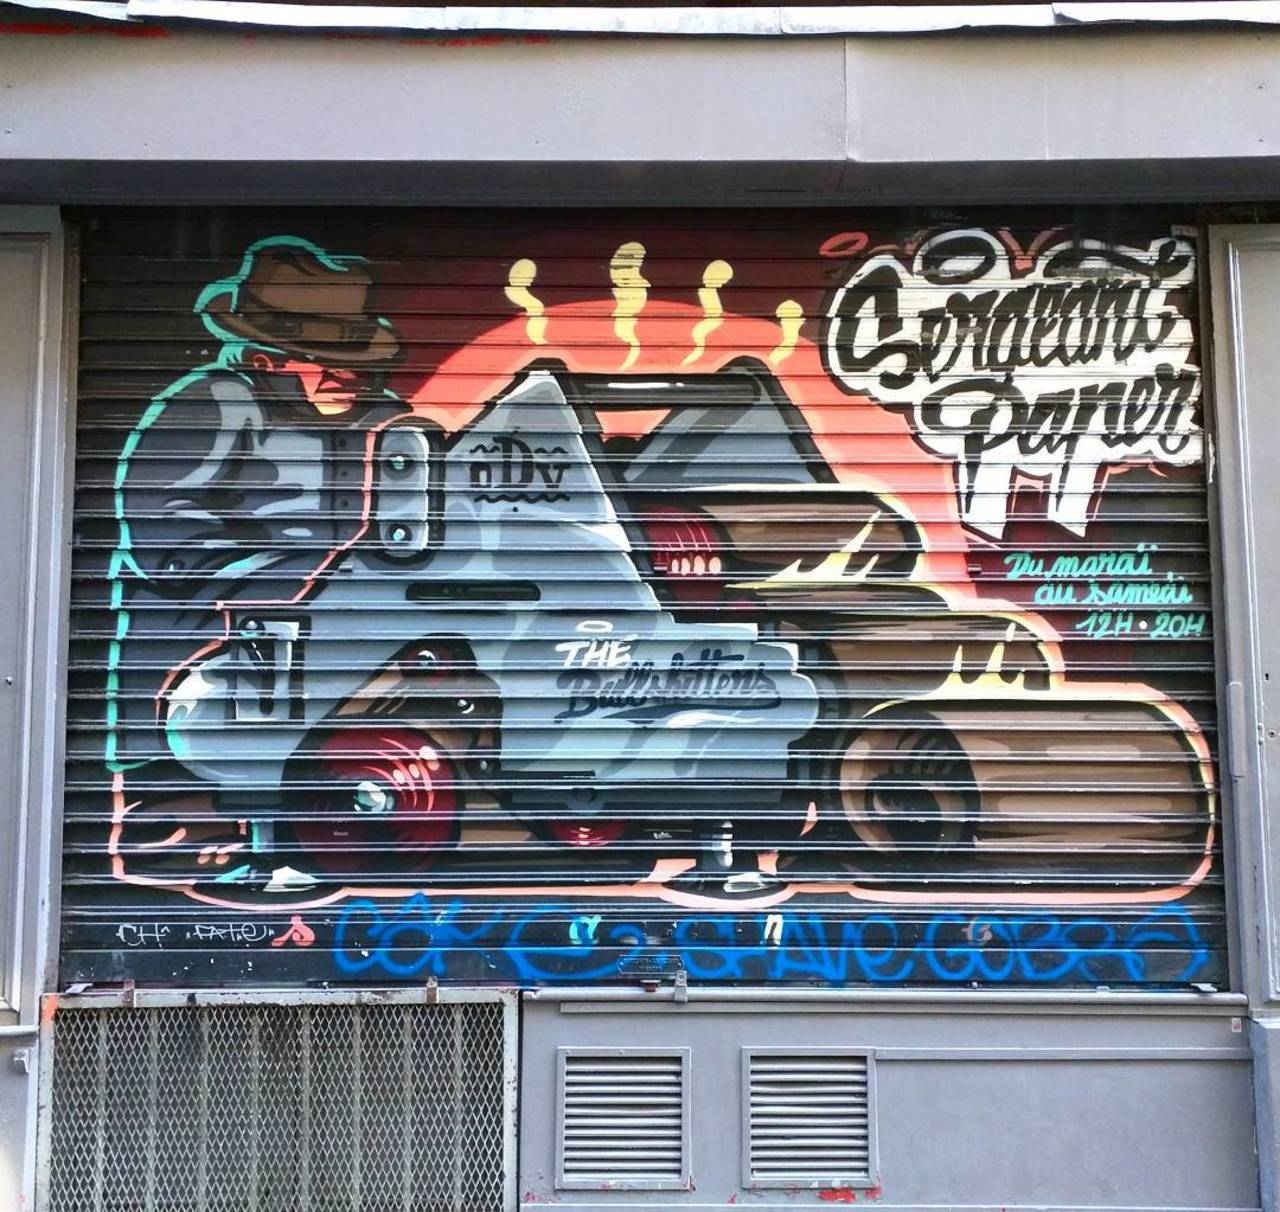 #Paris #graffiti photo by @alphaquadra http://ift.tt/1QextPU #StreetArt http://t.co/JWZm6sYna7